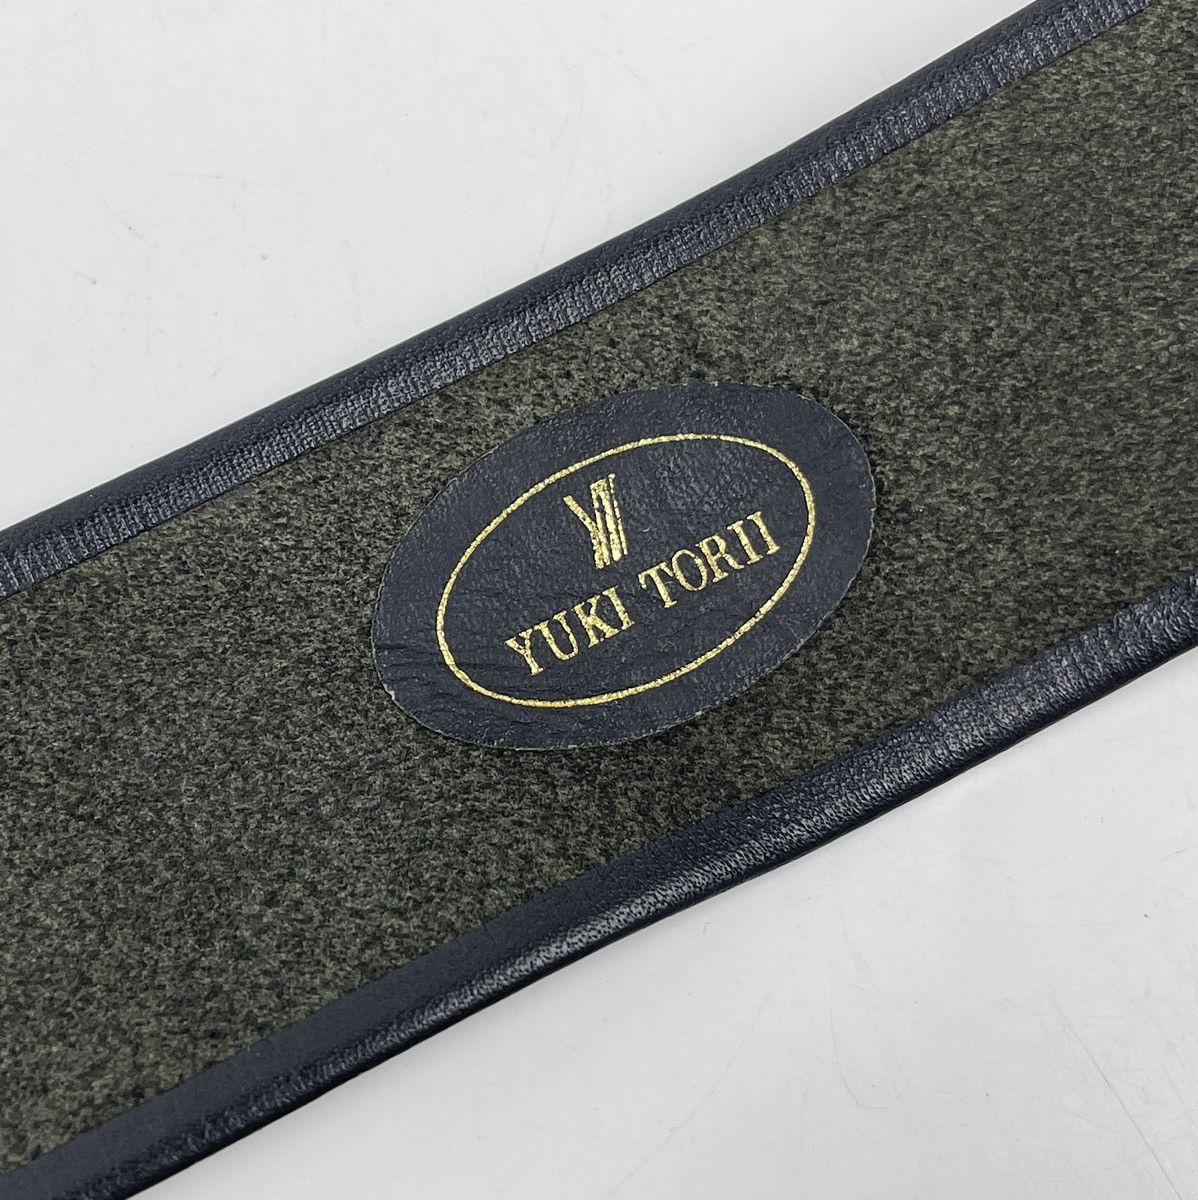 Genuine Leather - yuki torii leather belt tc18 - 4